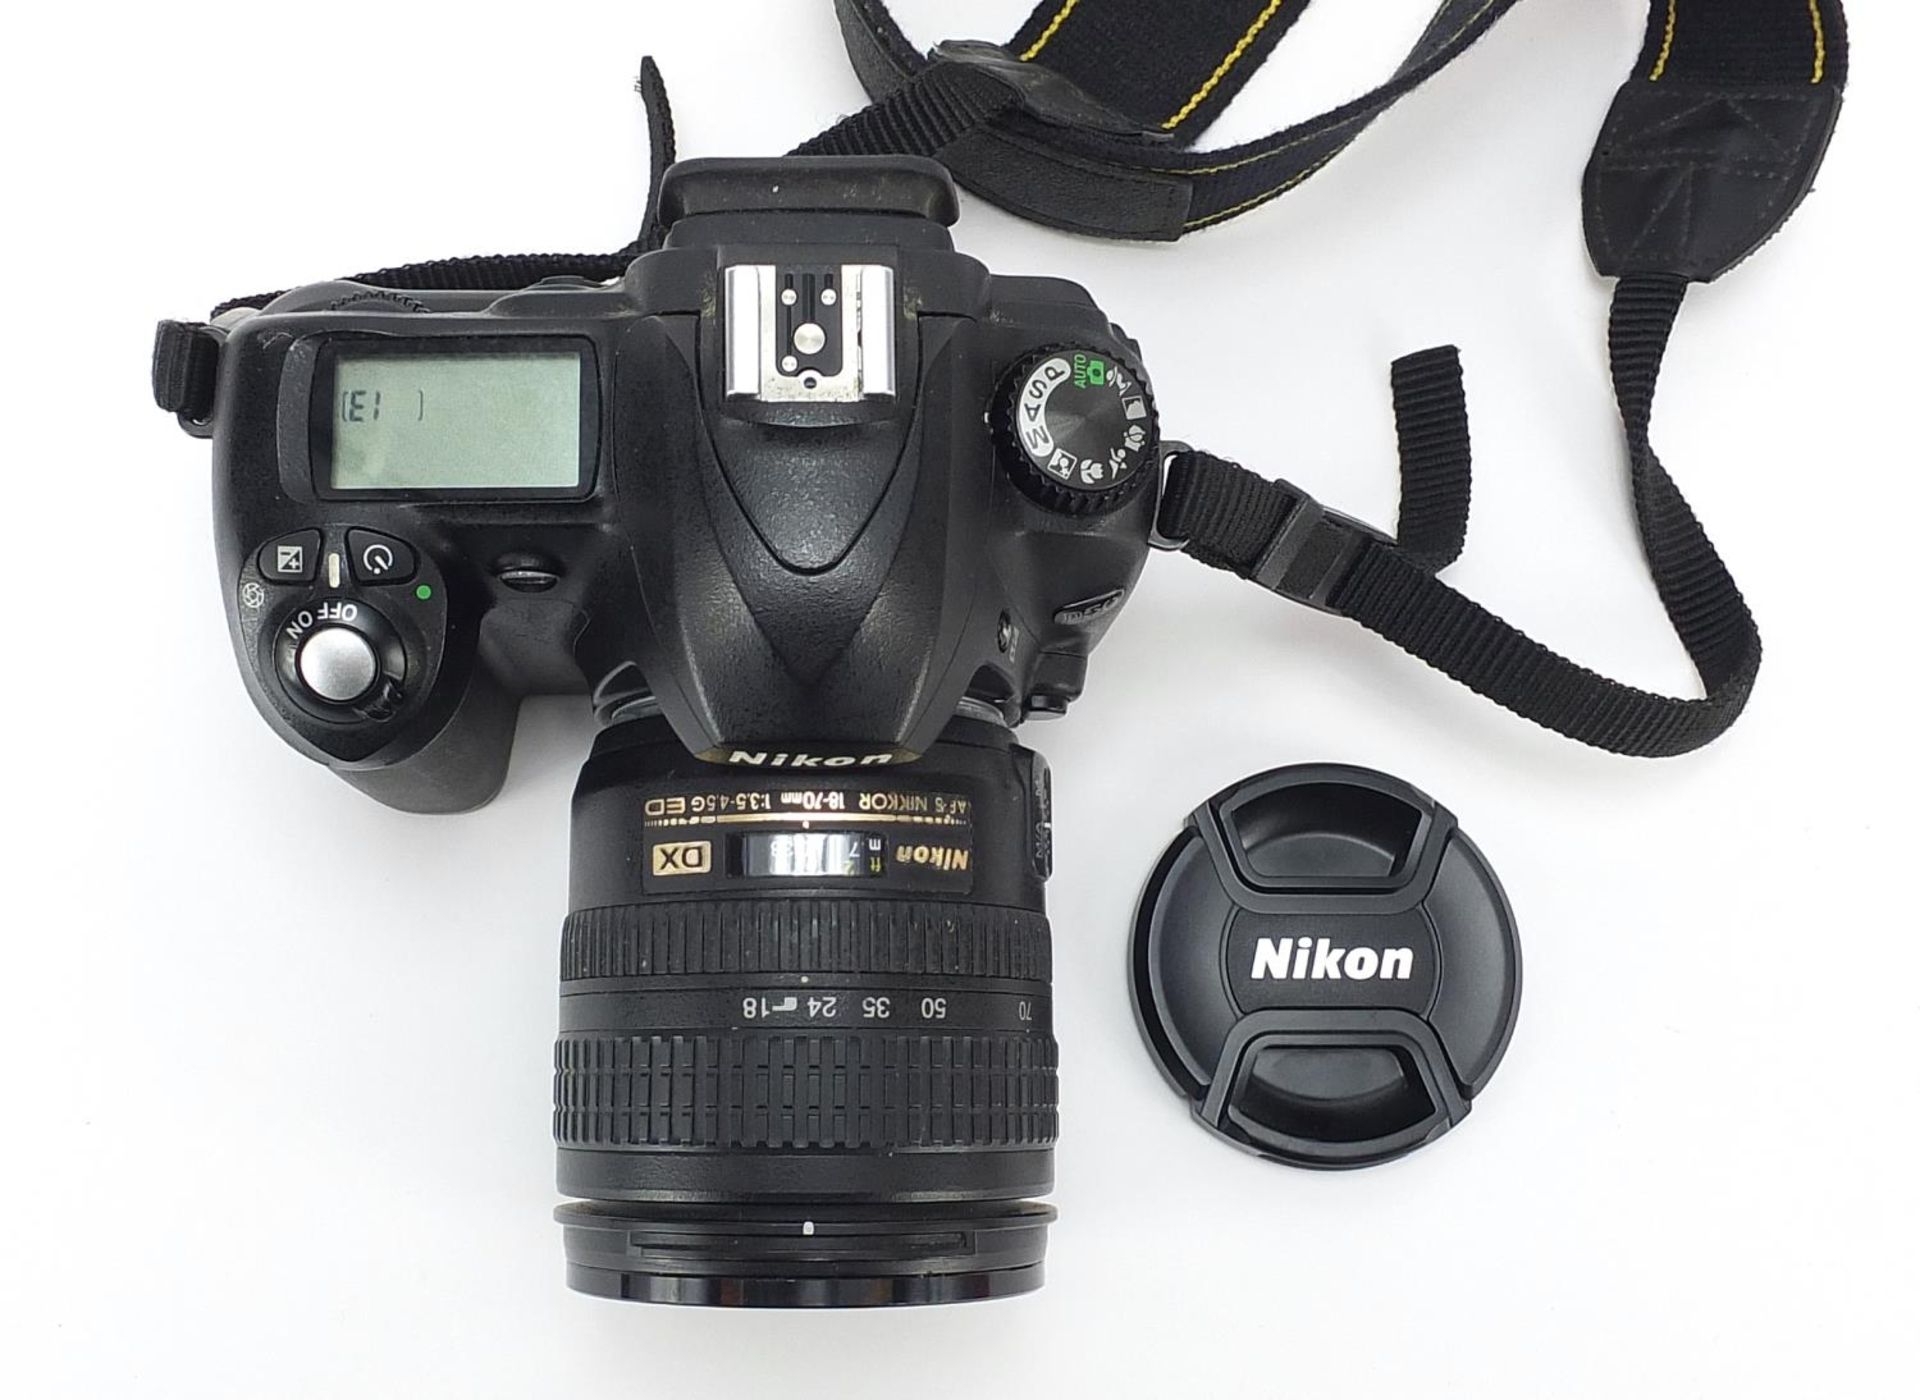 Nikon D50 DSL camera - Image 3 of 6